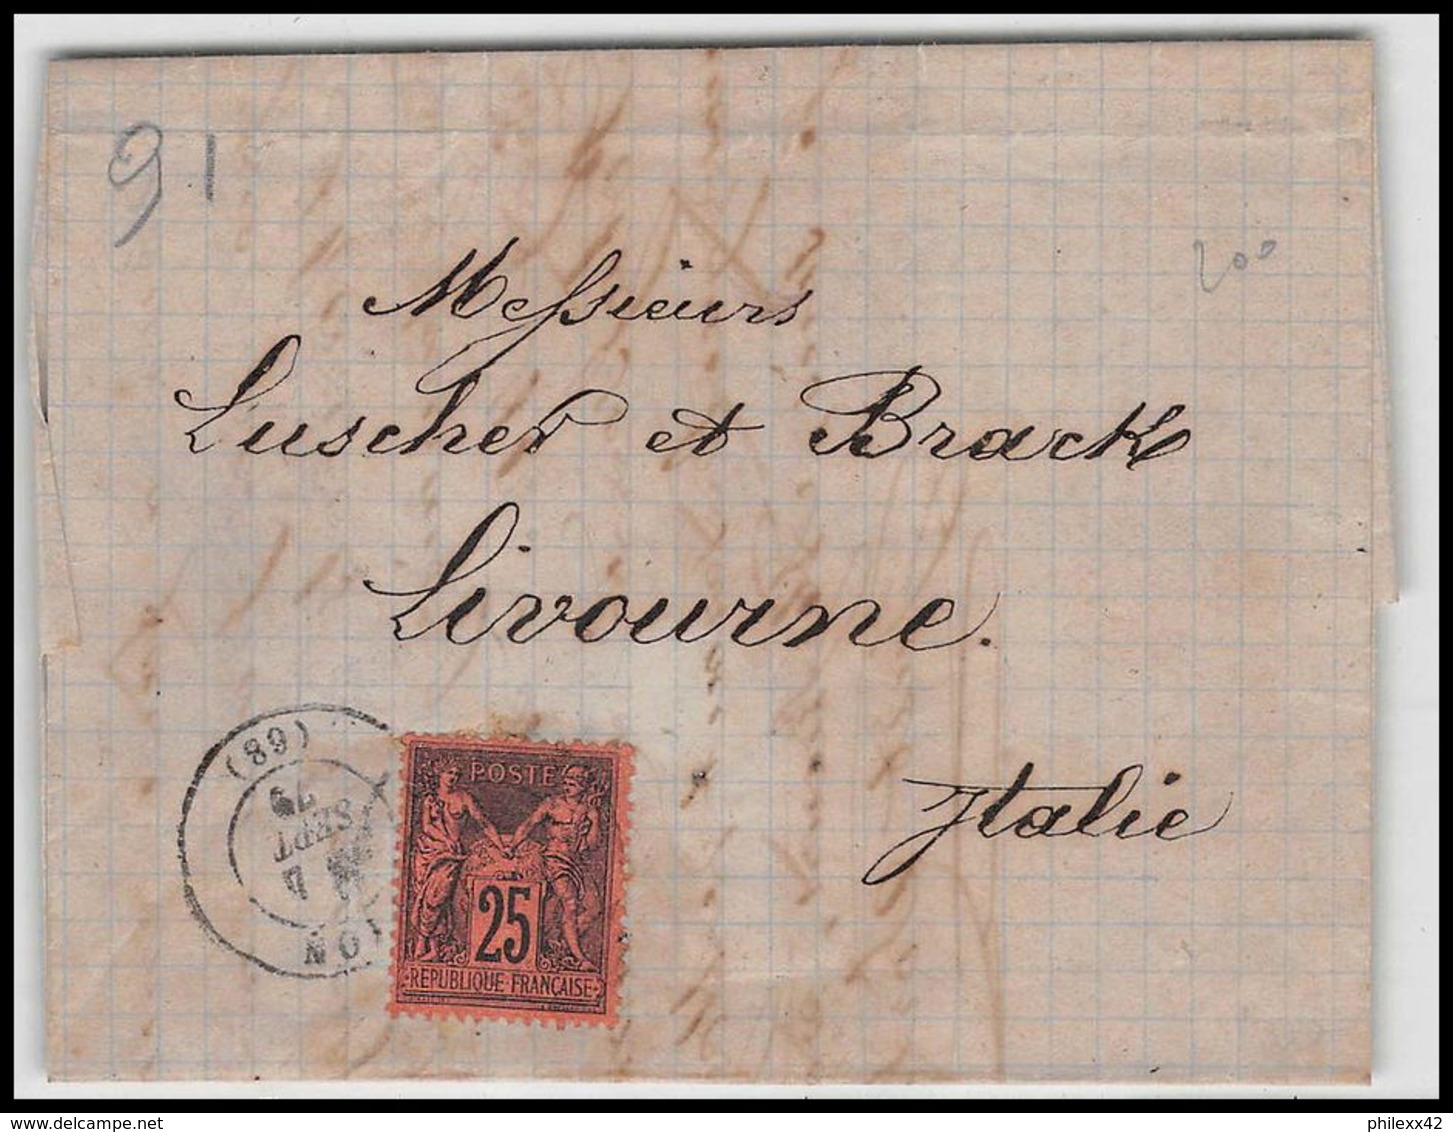 1387 LAC Lettre (cover) N°91 à Destination De Livorno Livourne Italie (italy) 04/09/1879 Cote + 50 Euros (Type Sage) - 1877-1920: Periodo Semi Moderno